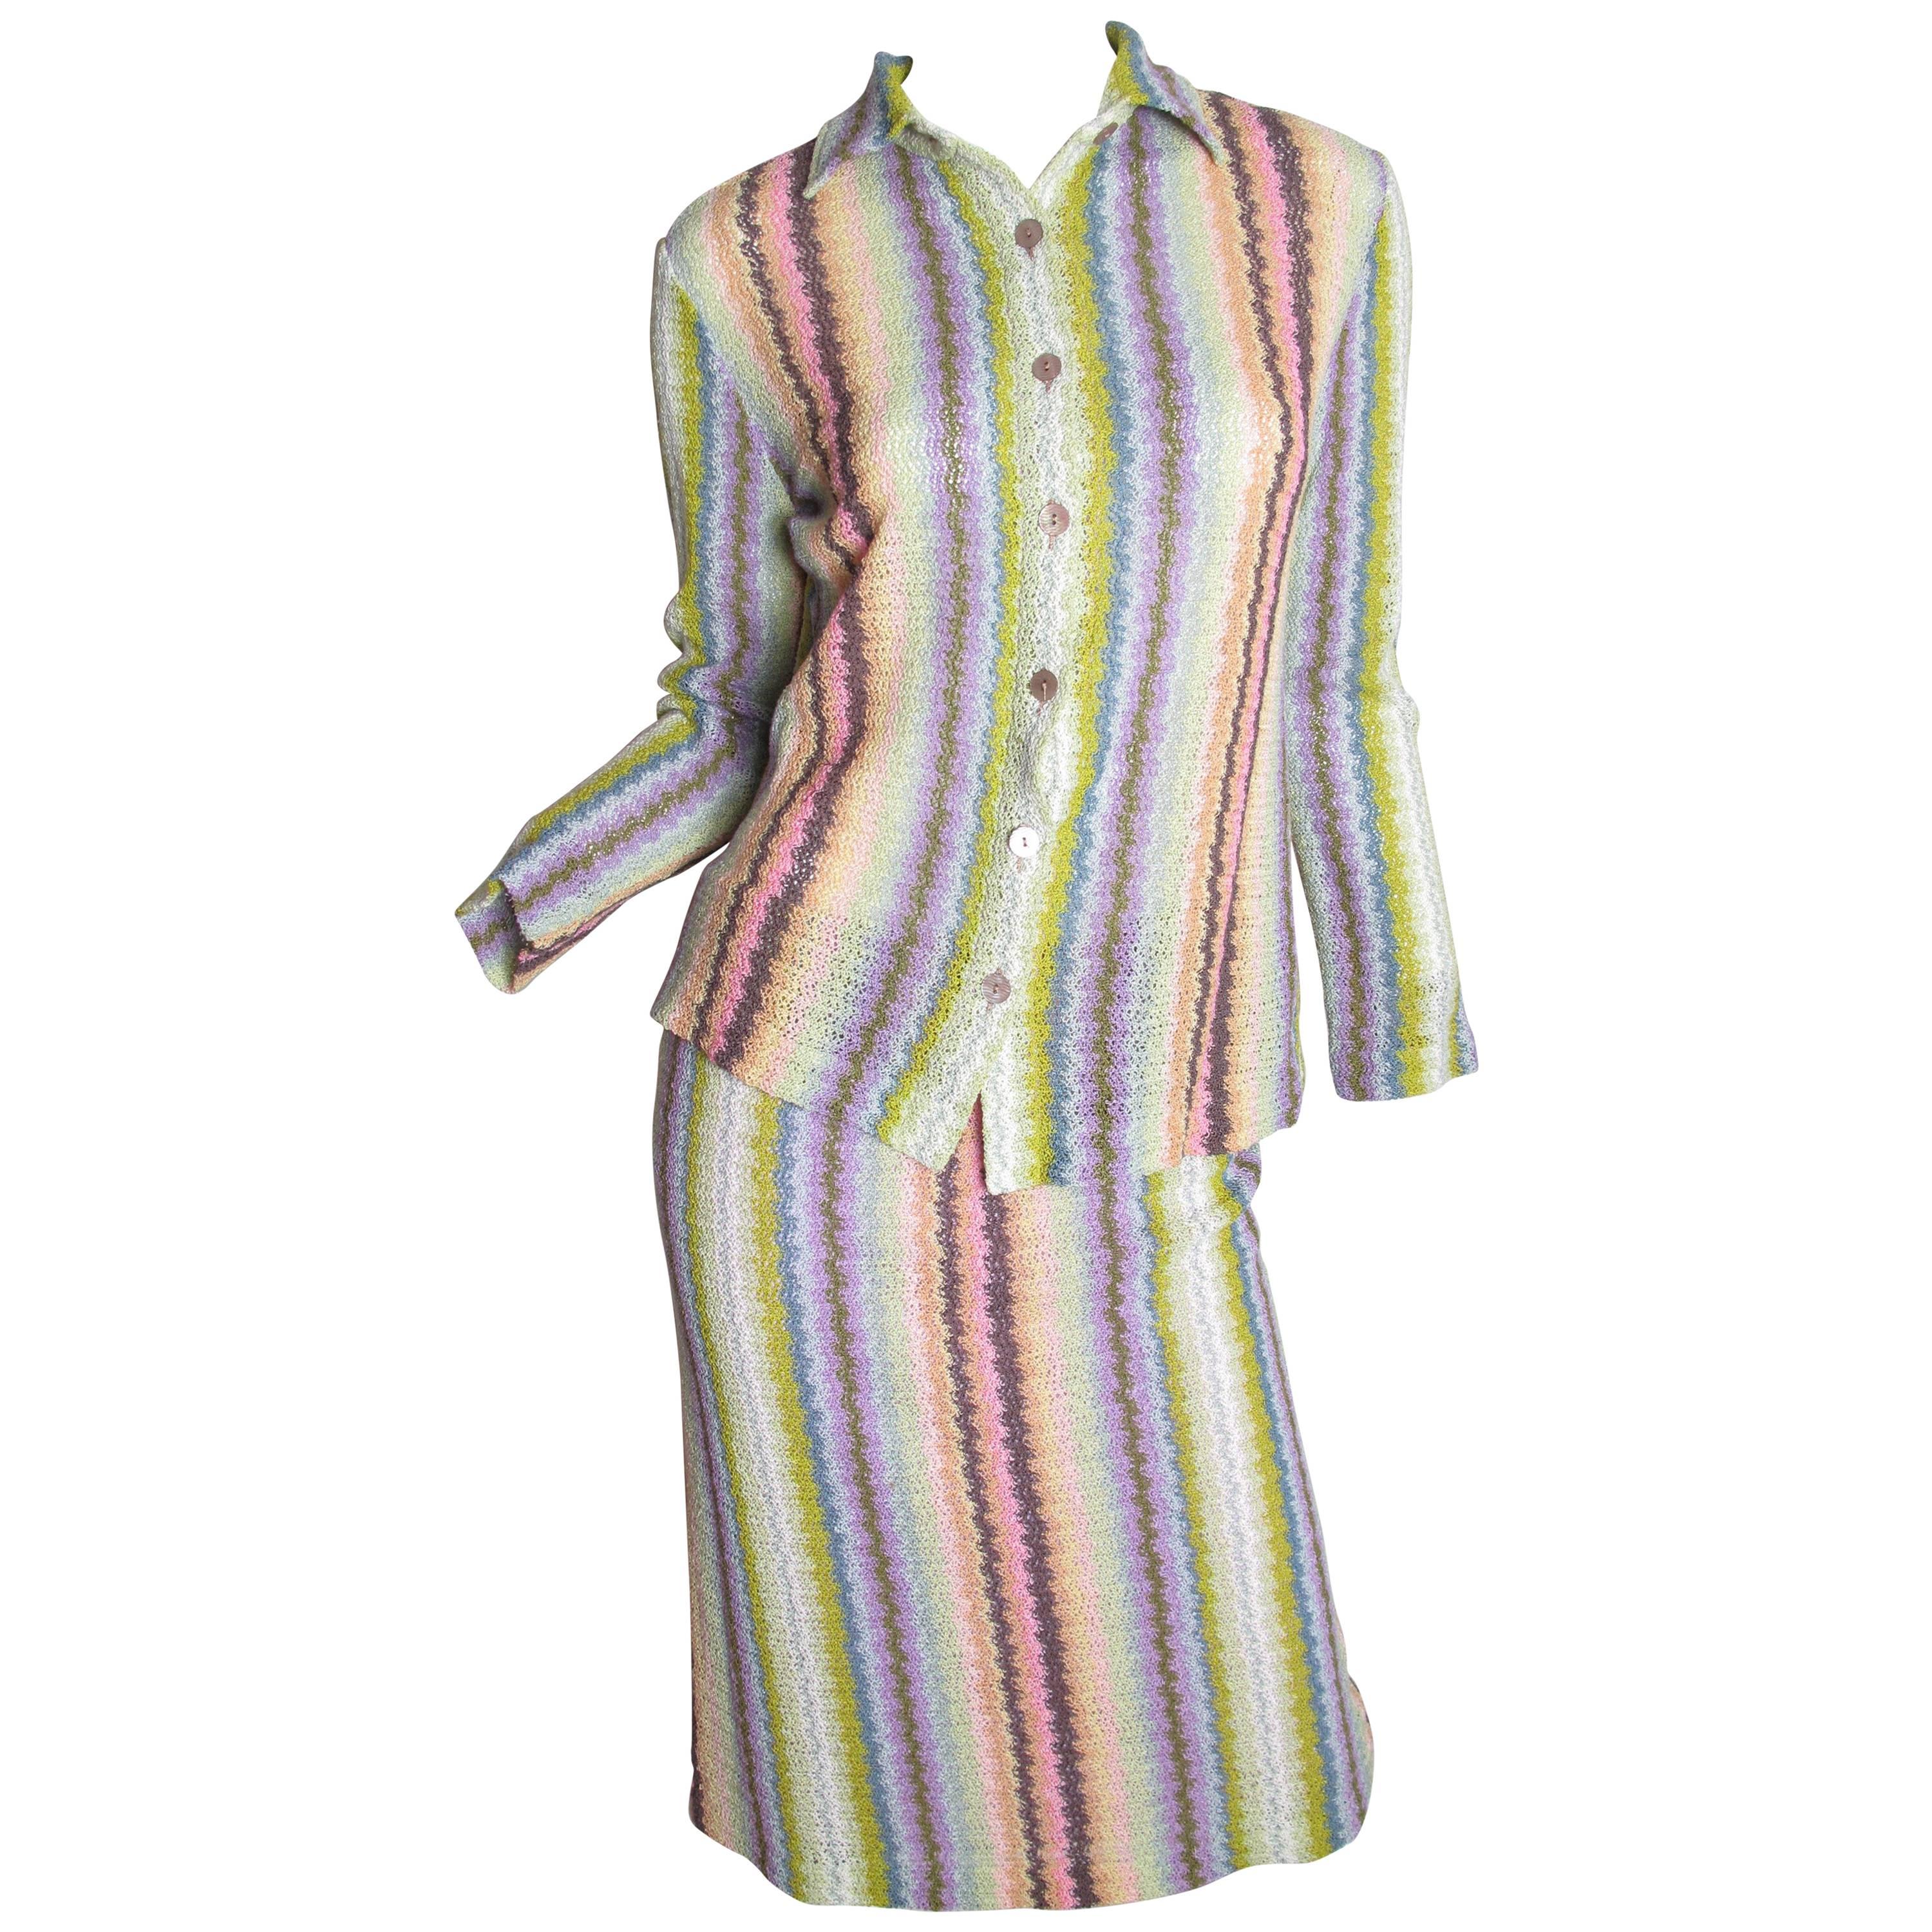 Missoni Pastel Rainbow Knit Top and Skirt 